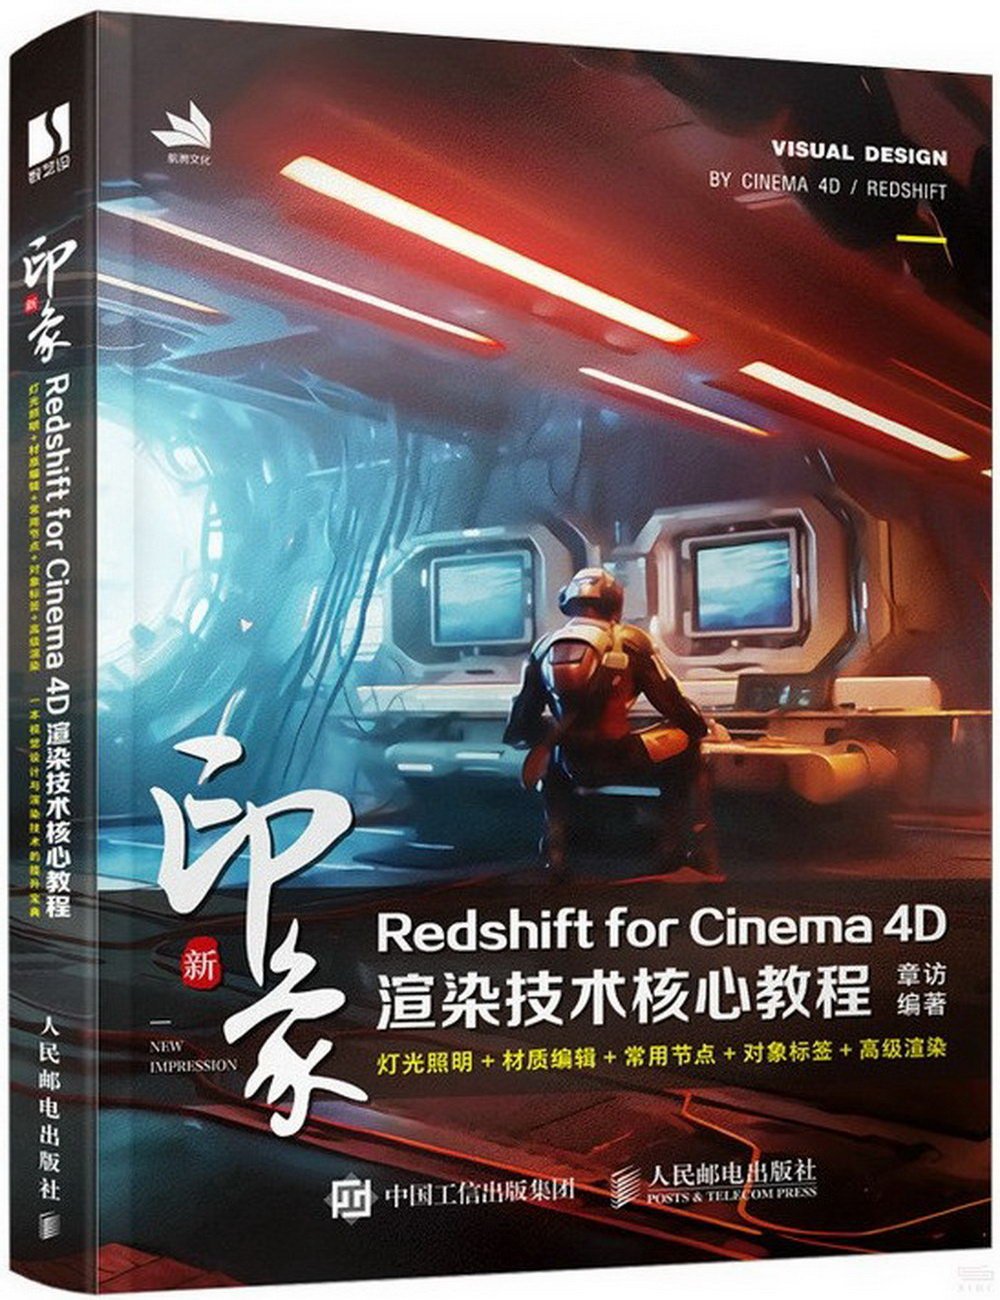 新印象：Redshift for Cinema 4D渲染技術核心教程